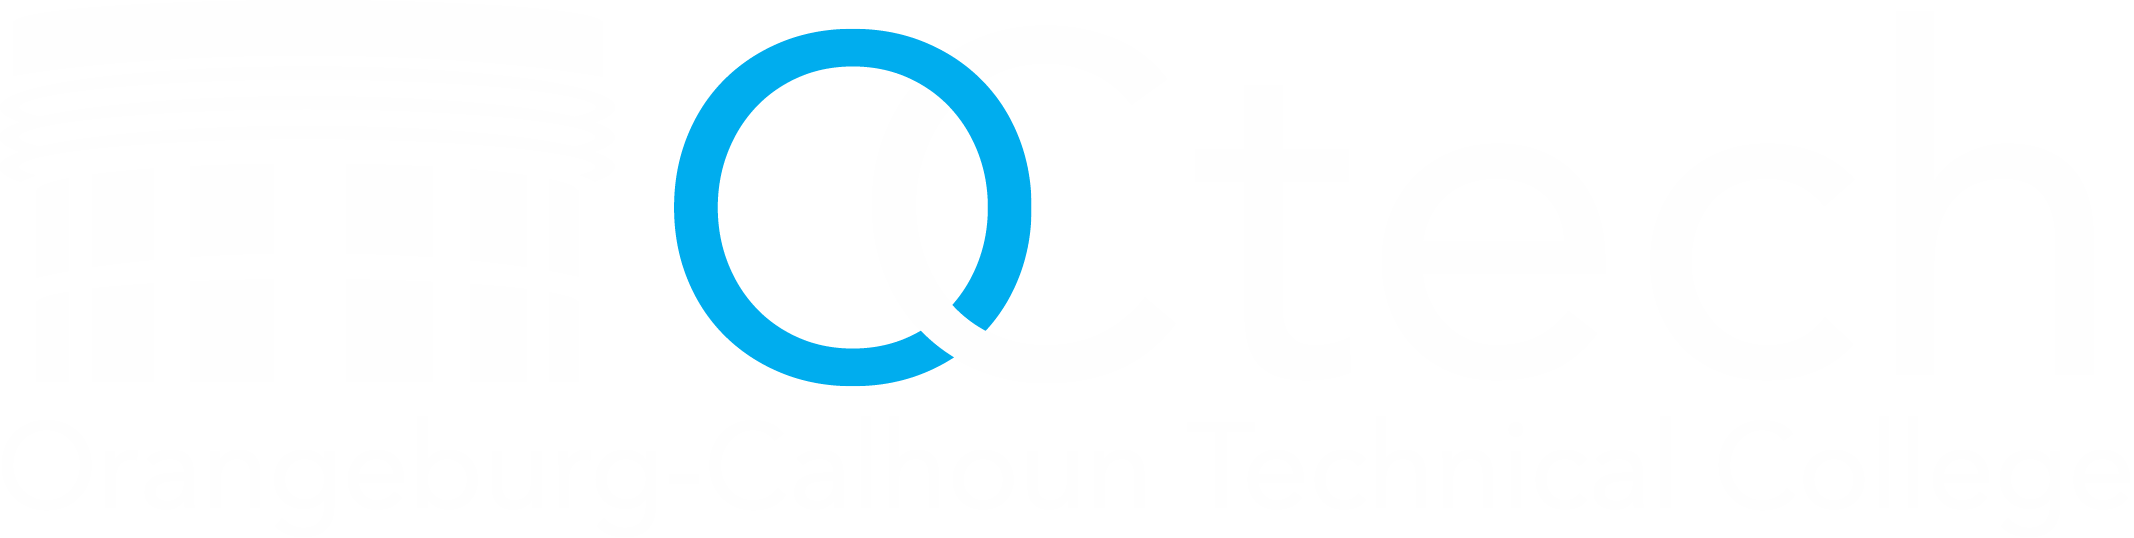 Orangeburg-Calhoun Technical College